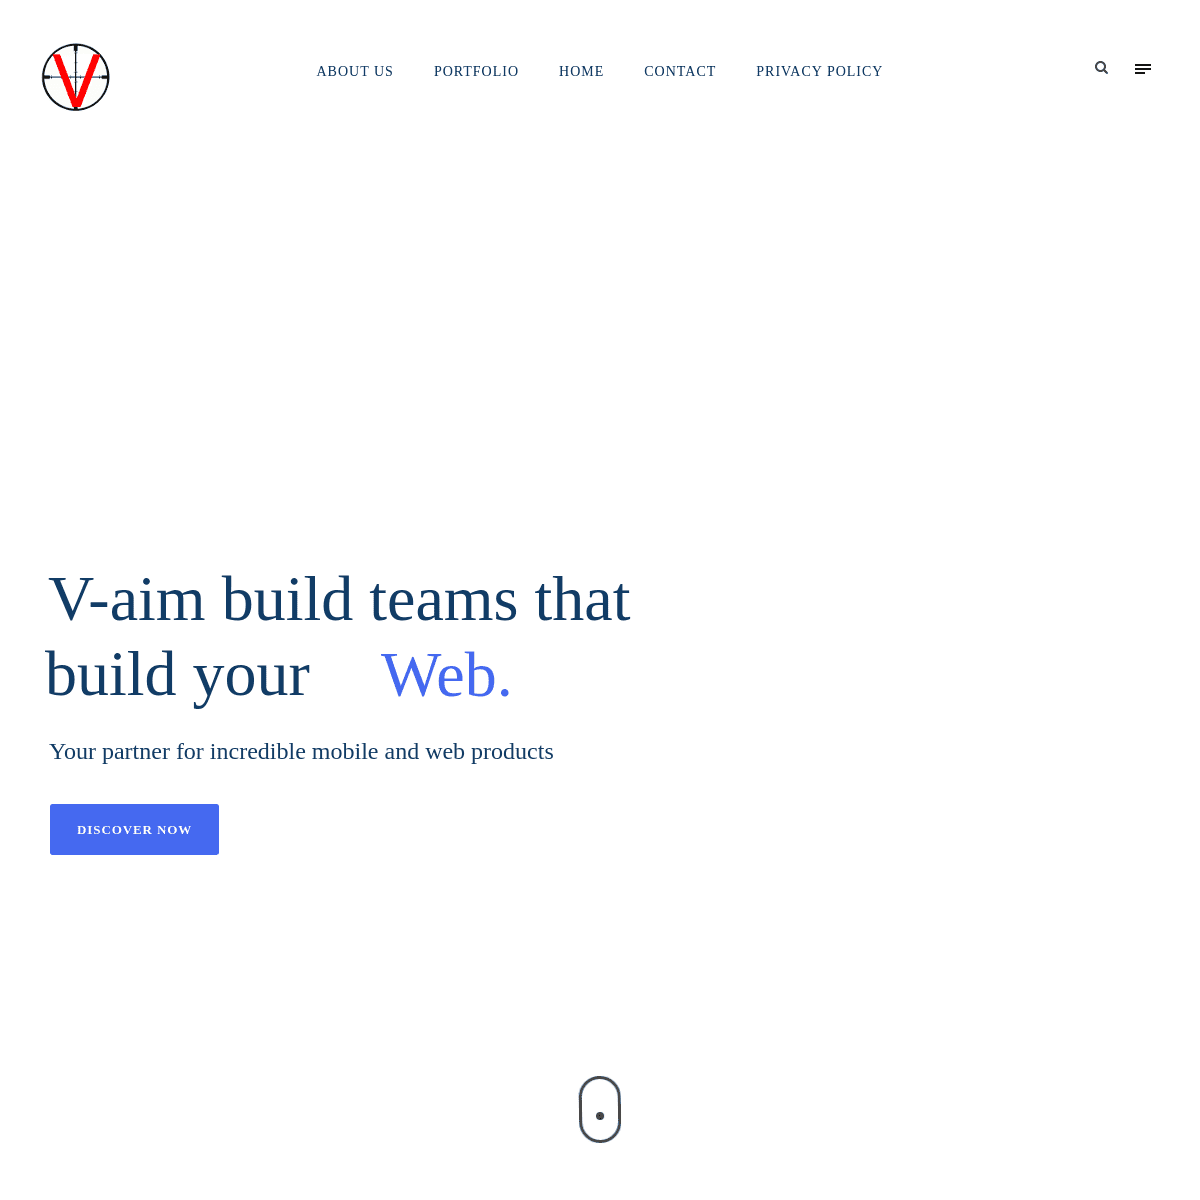 A complete backup of https://v-aim.com